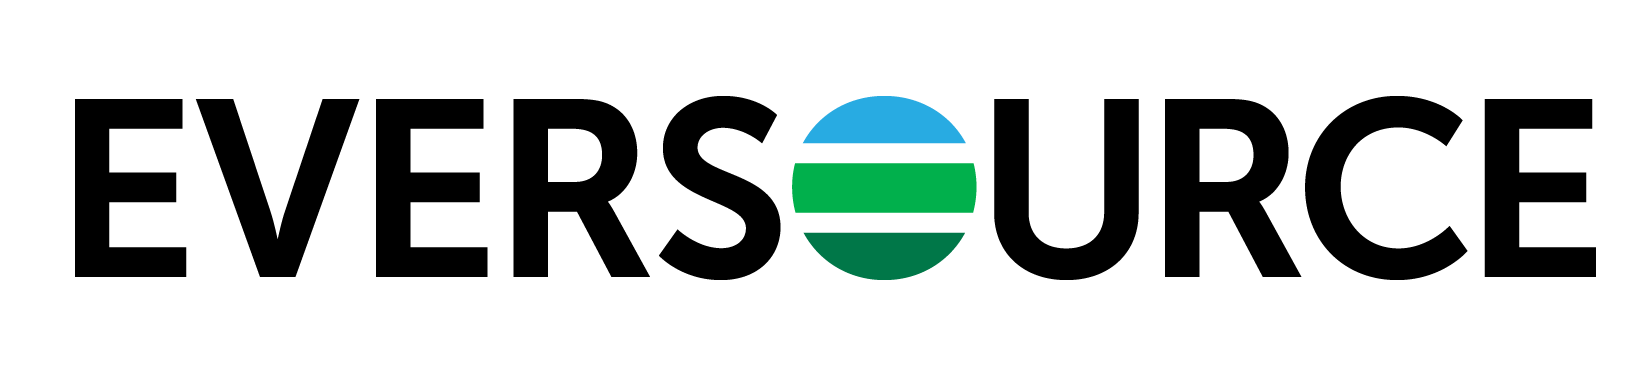 Eversource Battery Program logo